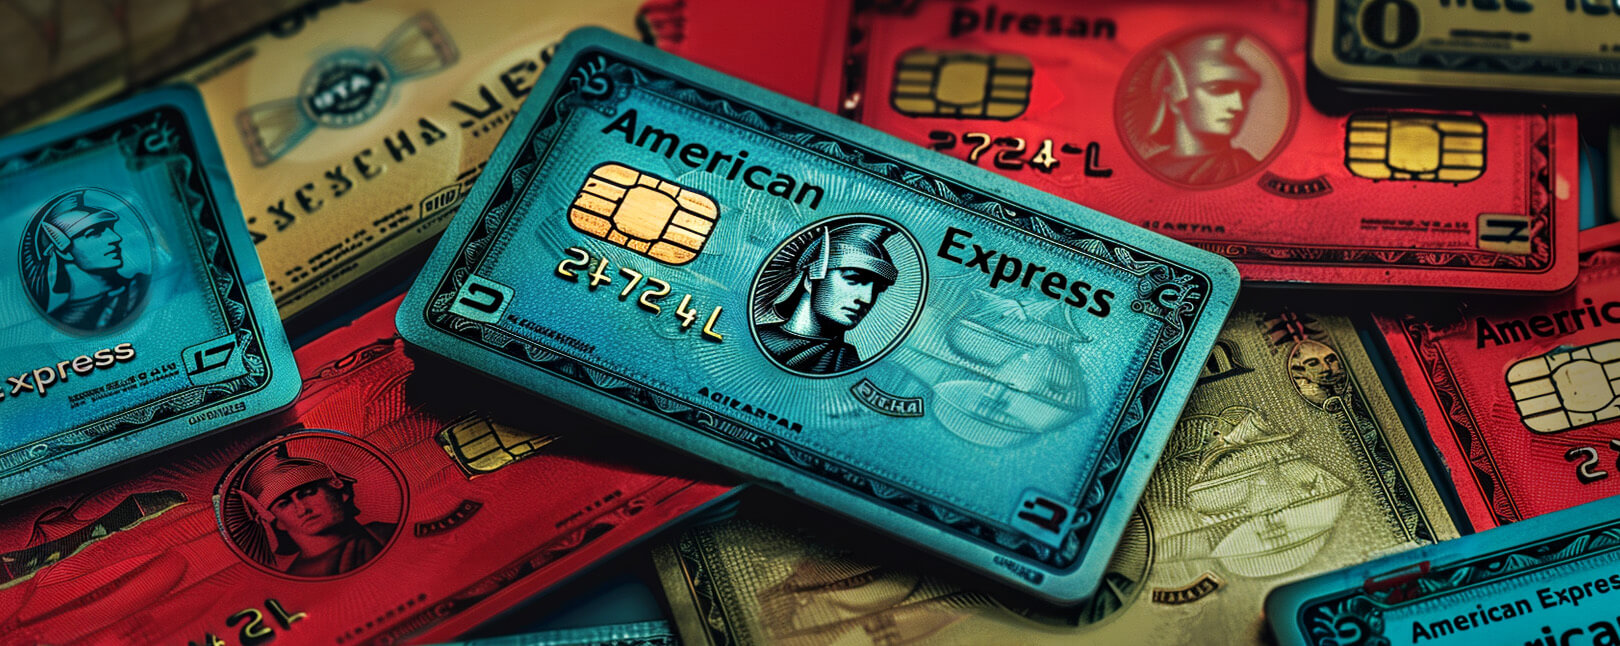 American Express Chargebacks